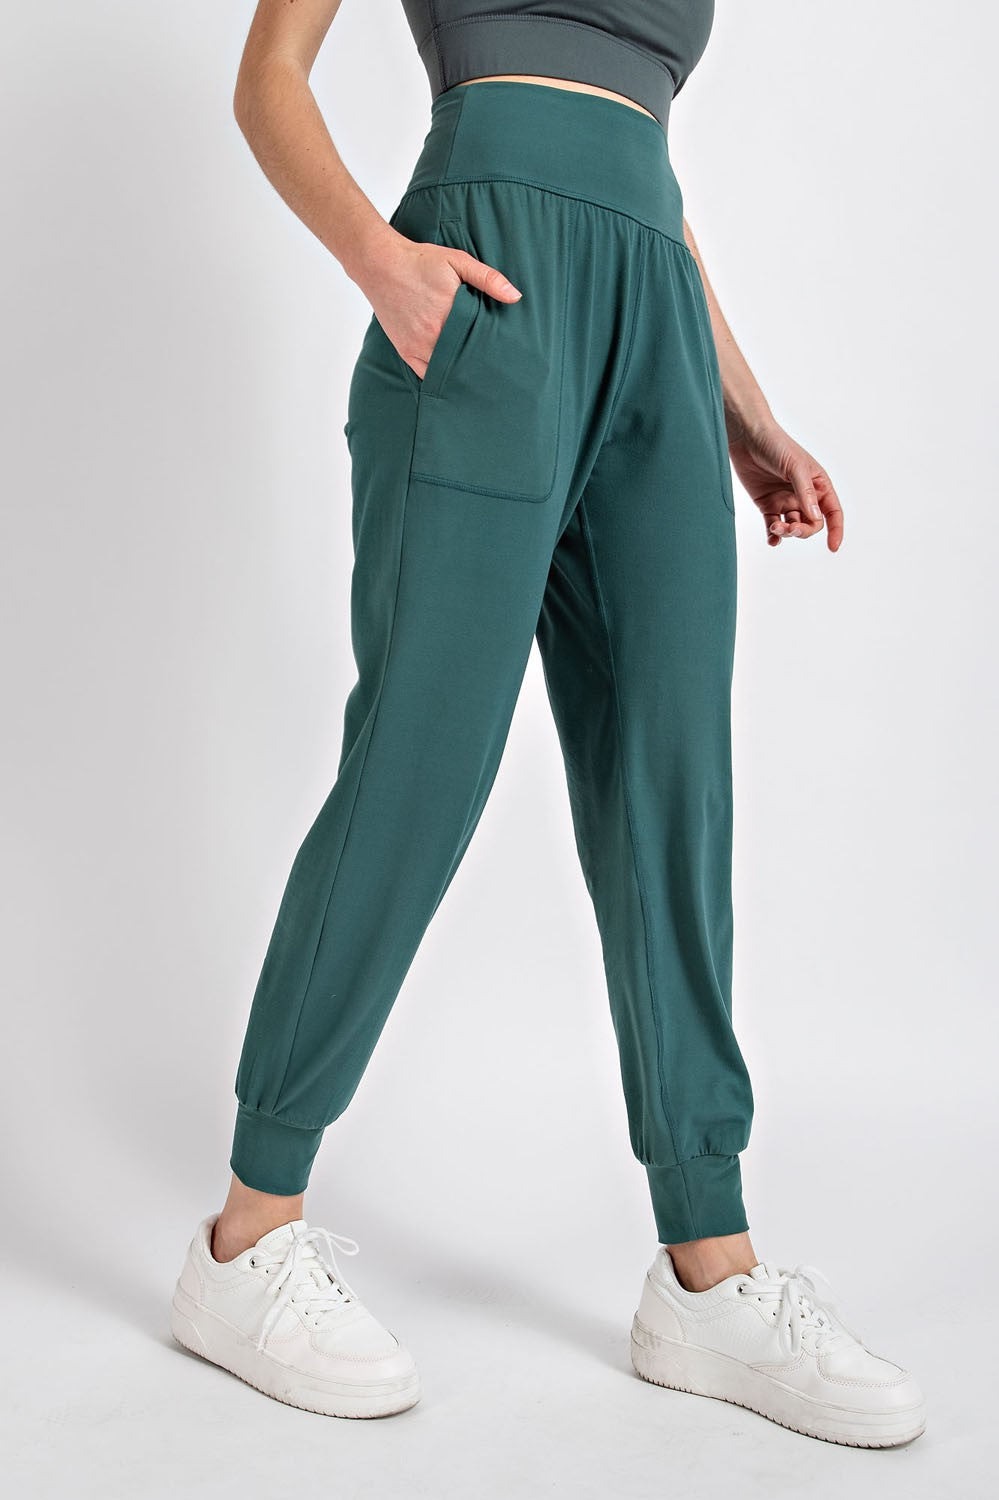 everglade green lululemon leggings outfit｜TikTok Search